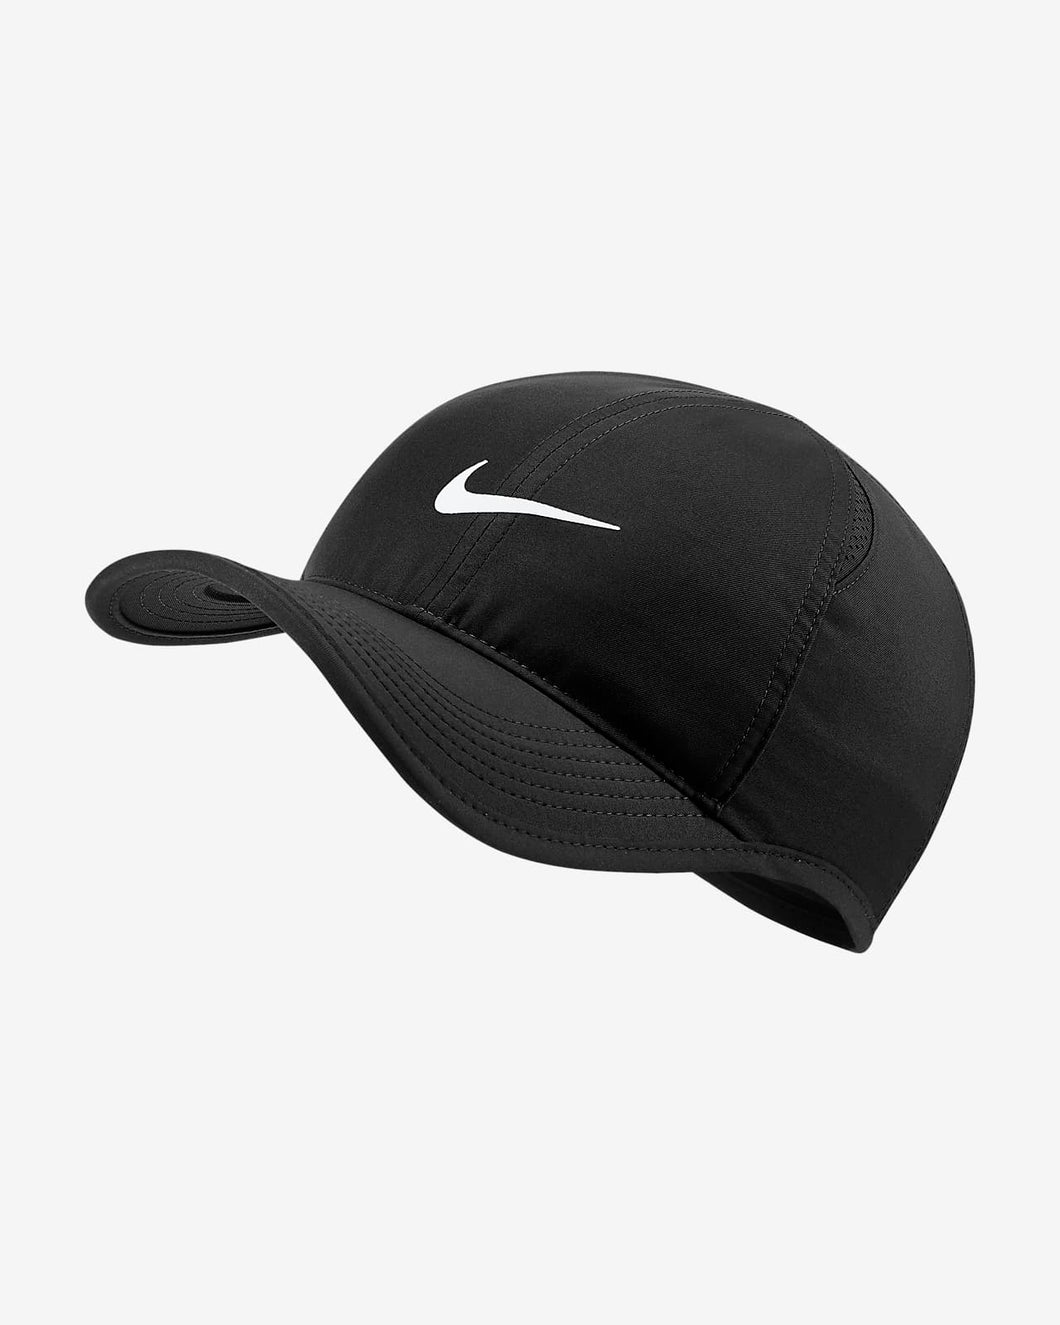 Nike Sportswear AeroBill Featherlight (Black)